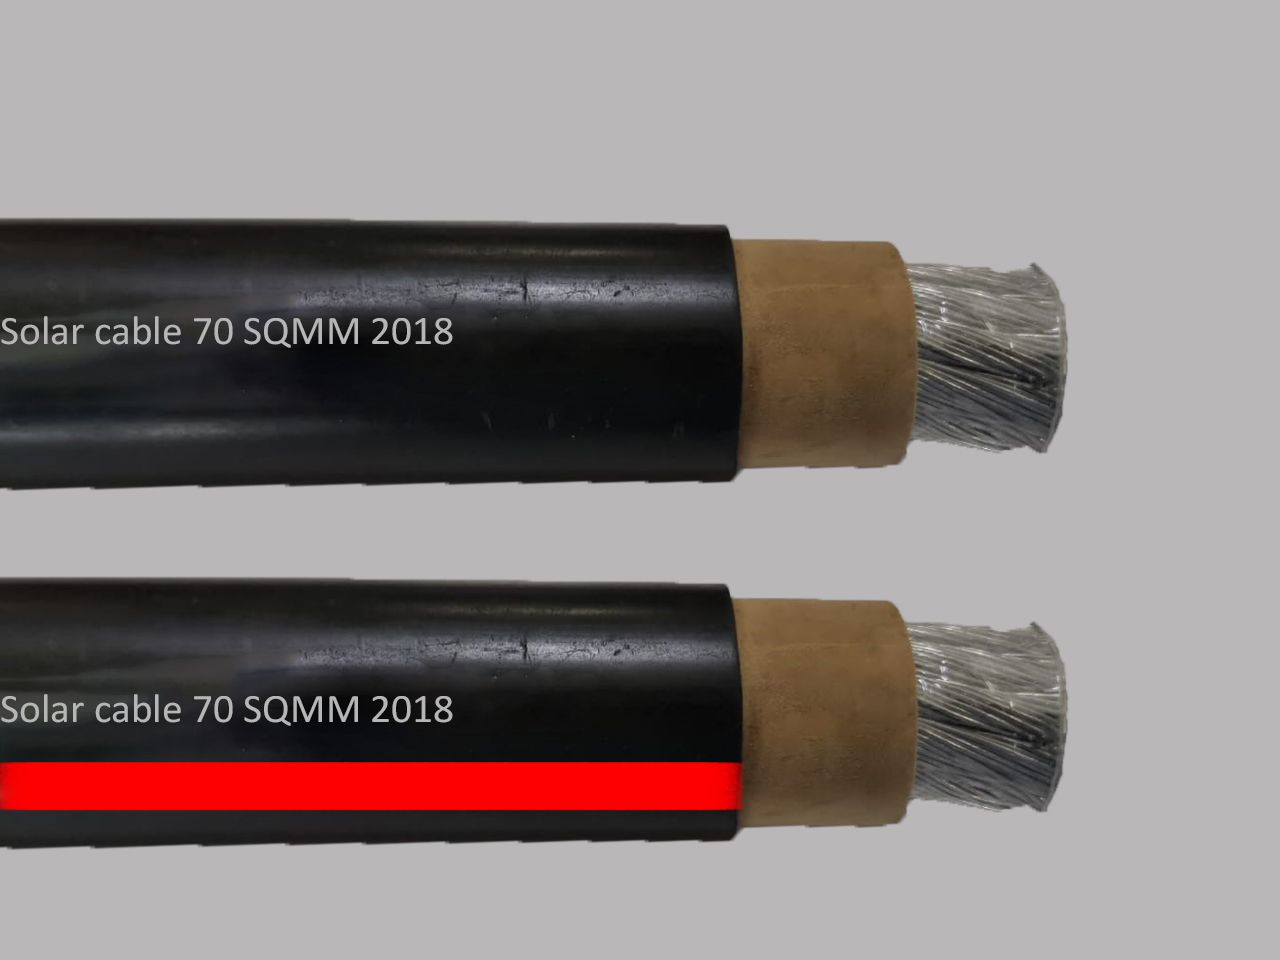 en_certified-dc-solar-cable-70sqm-50mtr-drum-red.jpg